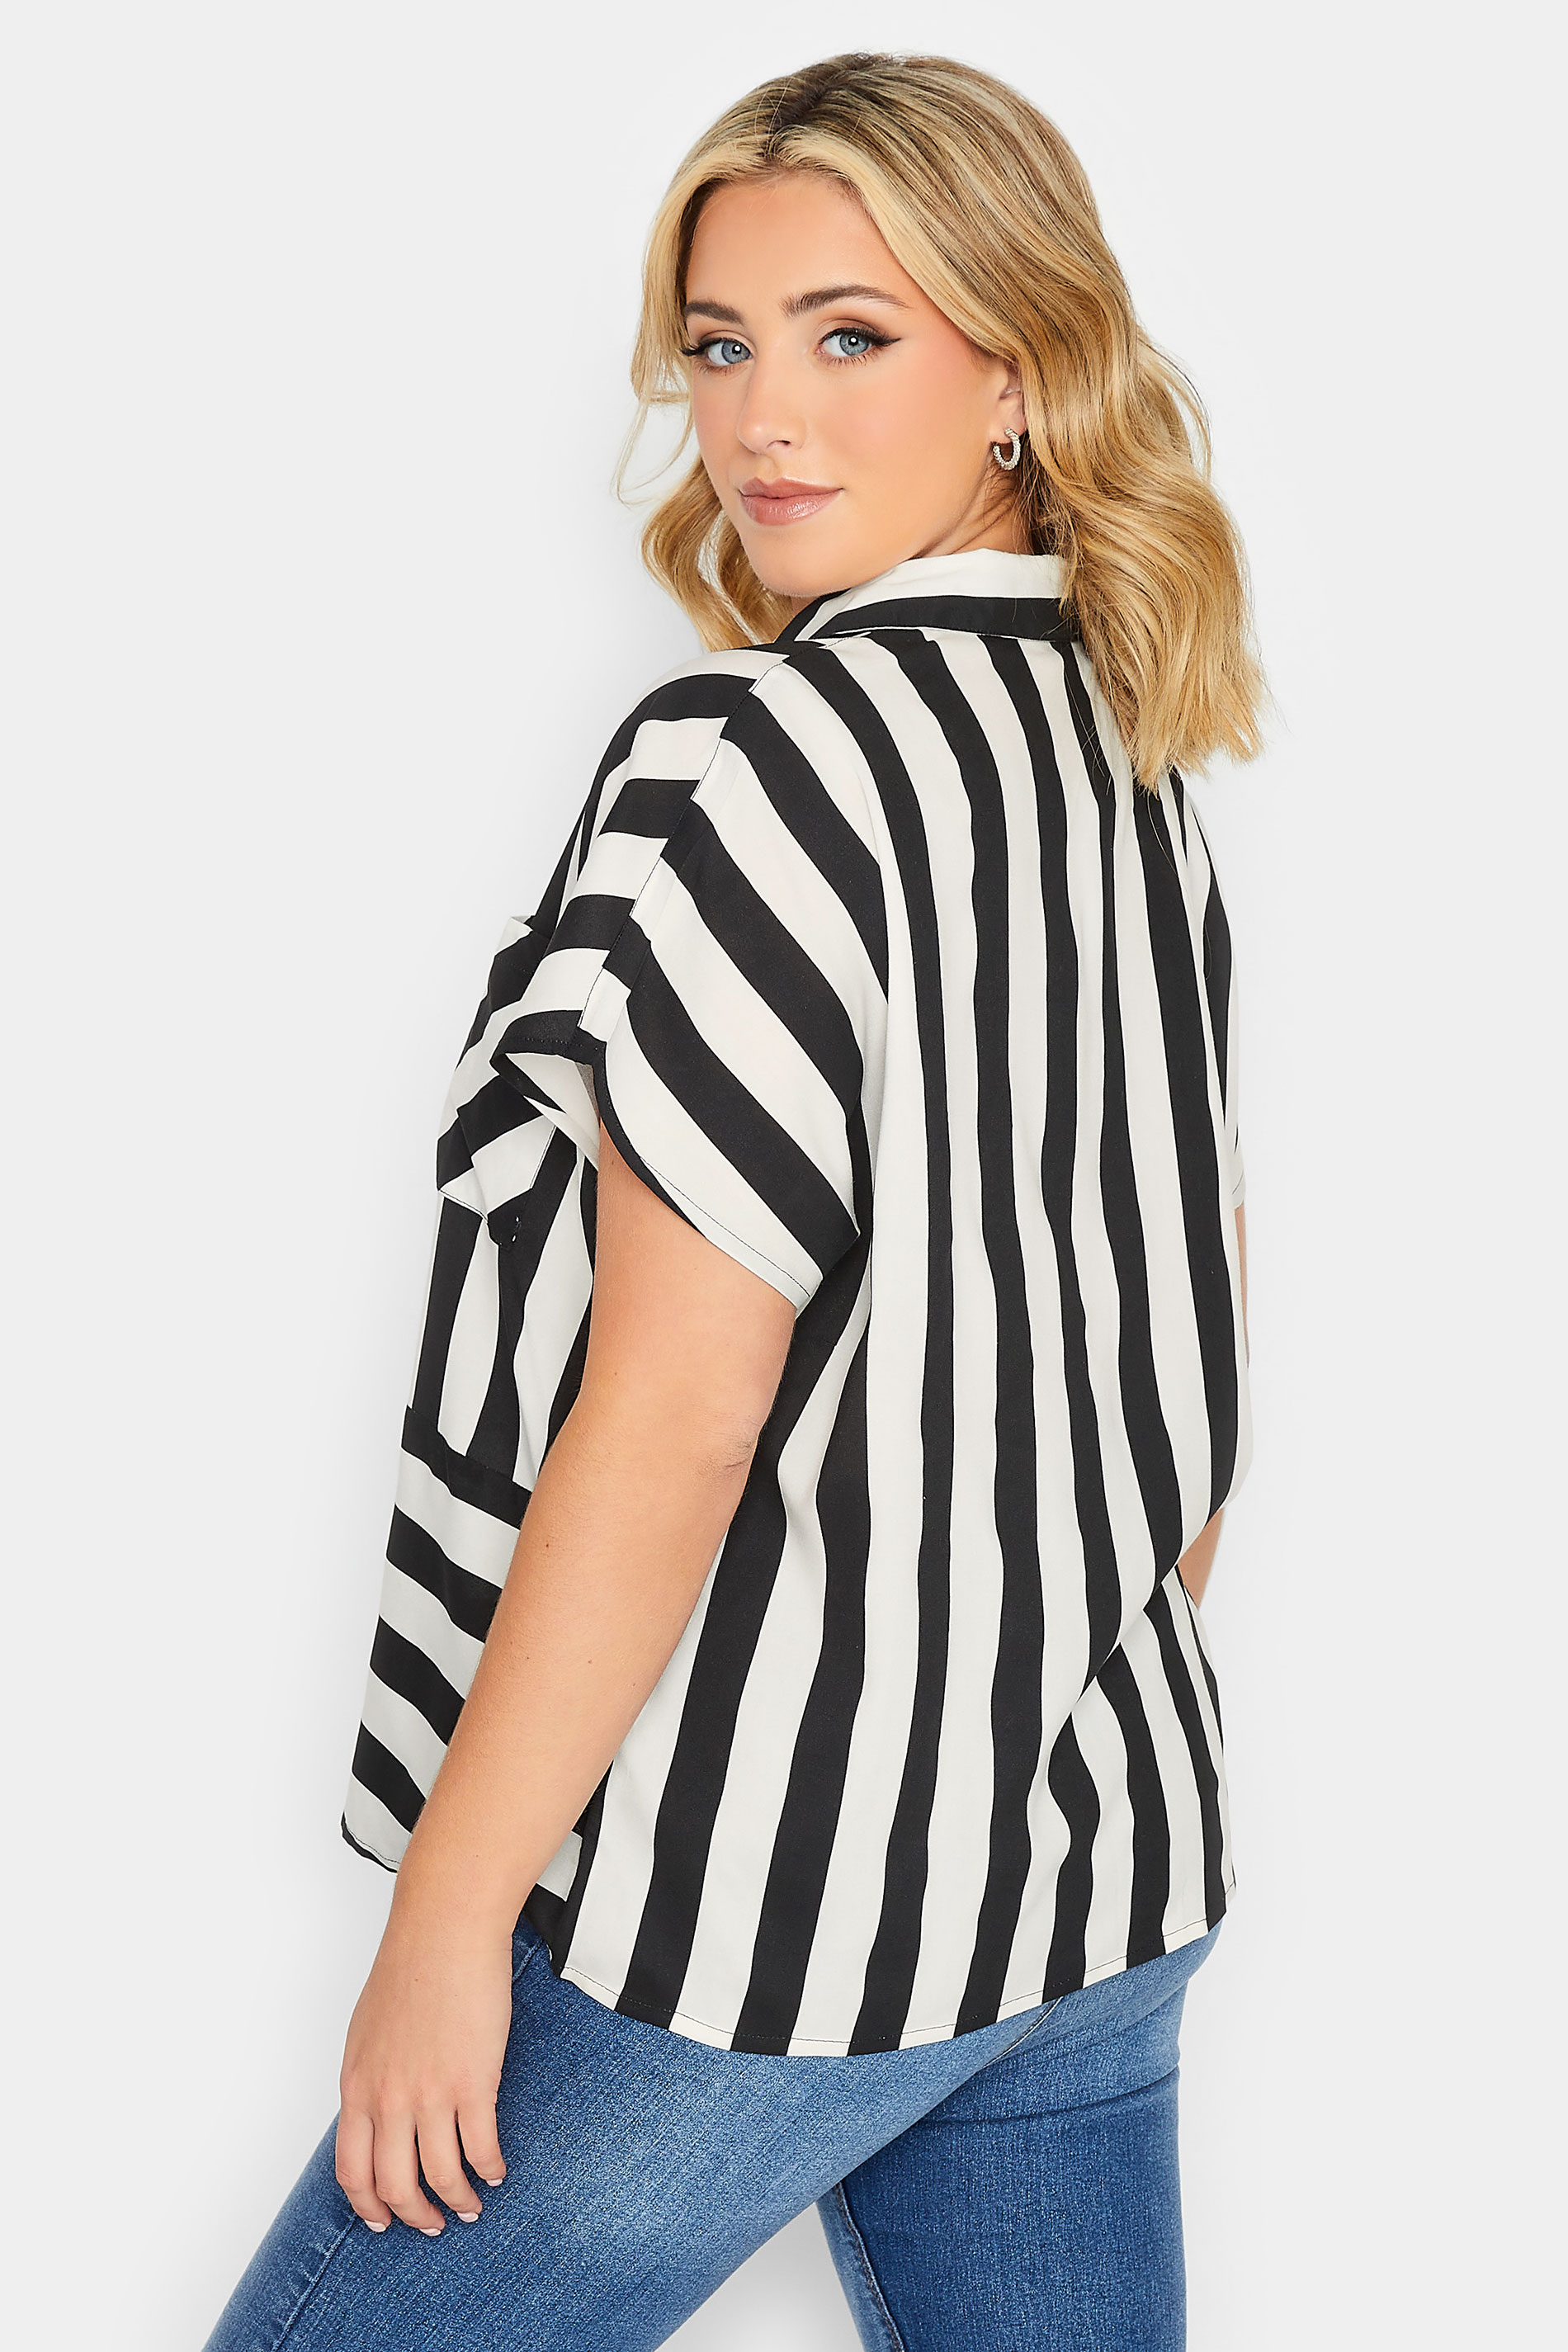 YOURS PETITE Plus Size Curve Black & White Stripe Shirt | Yours Clothing  3